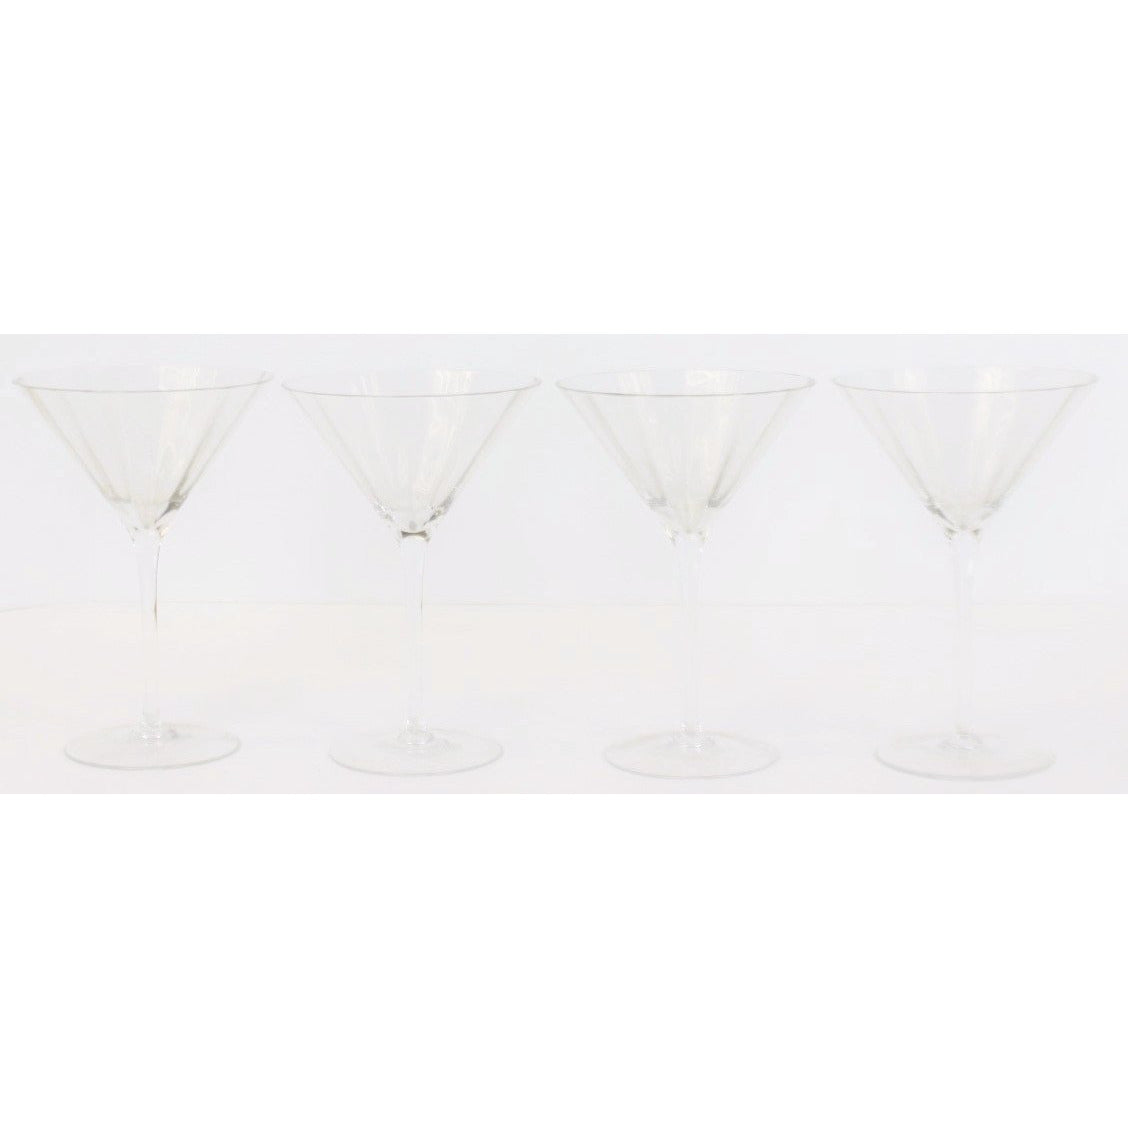 Set of 4 Martini Glasses